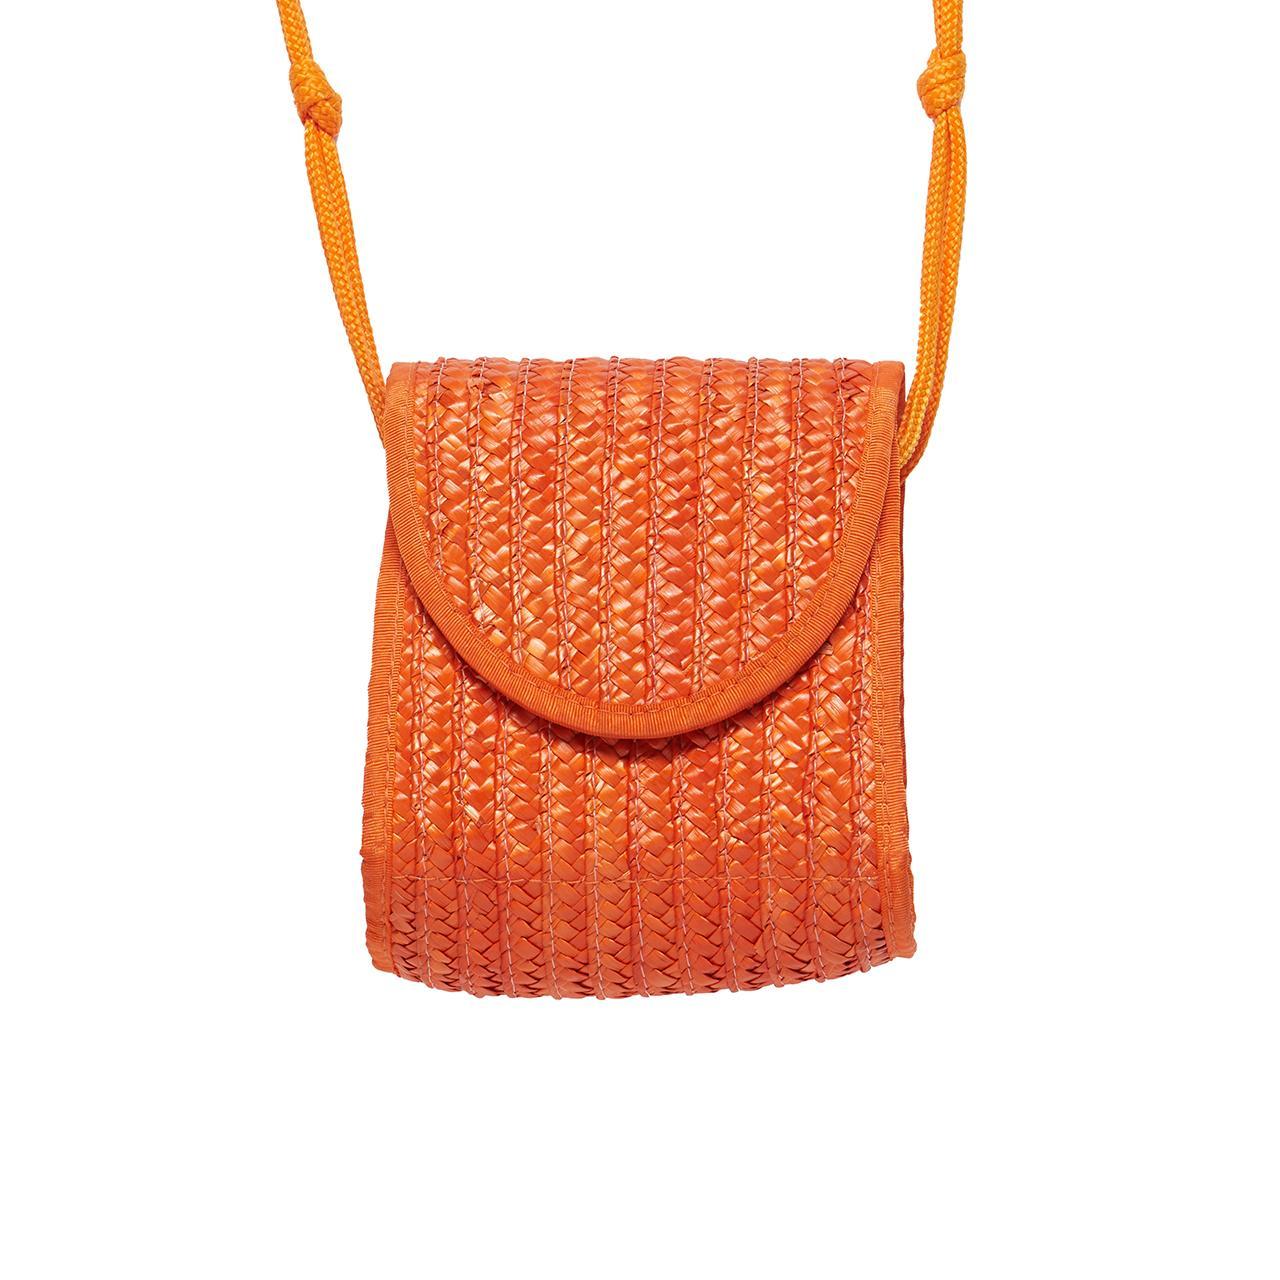 Lamb Shoulder Bag Orange Purse Size Small 9x9 Vintage Good Condition Cute |  eBay